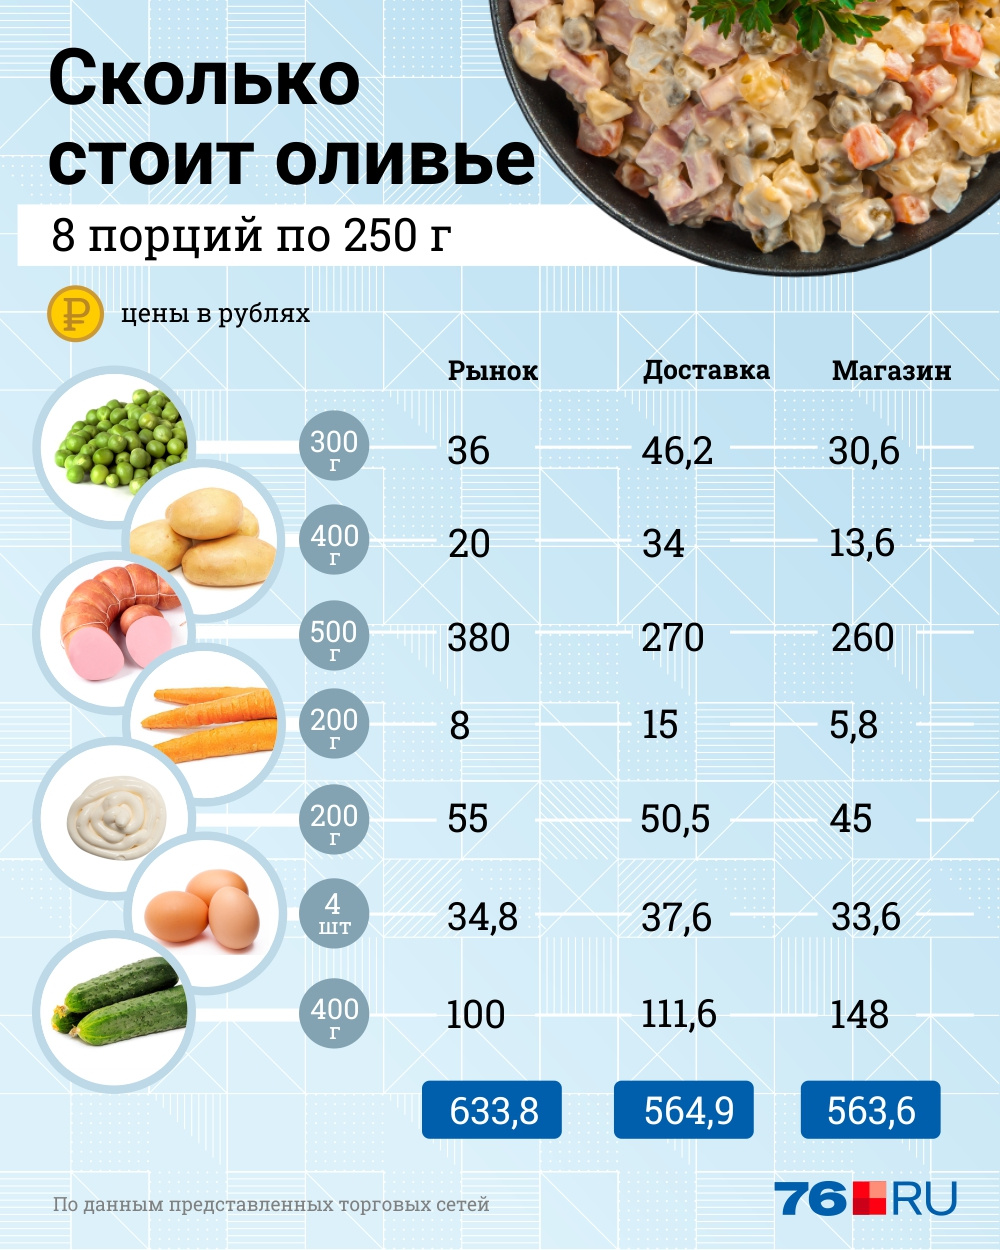 У каждого ингредиента указана цена на необходимый нам в салат вес